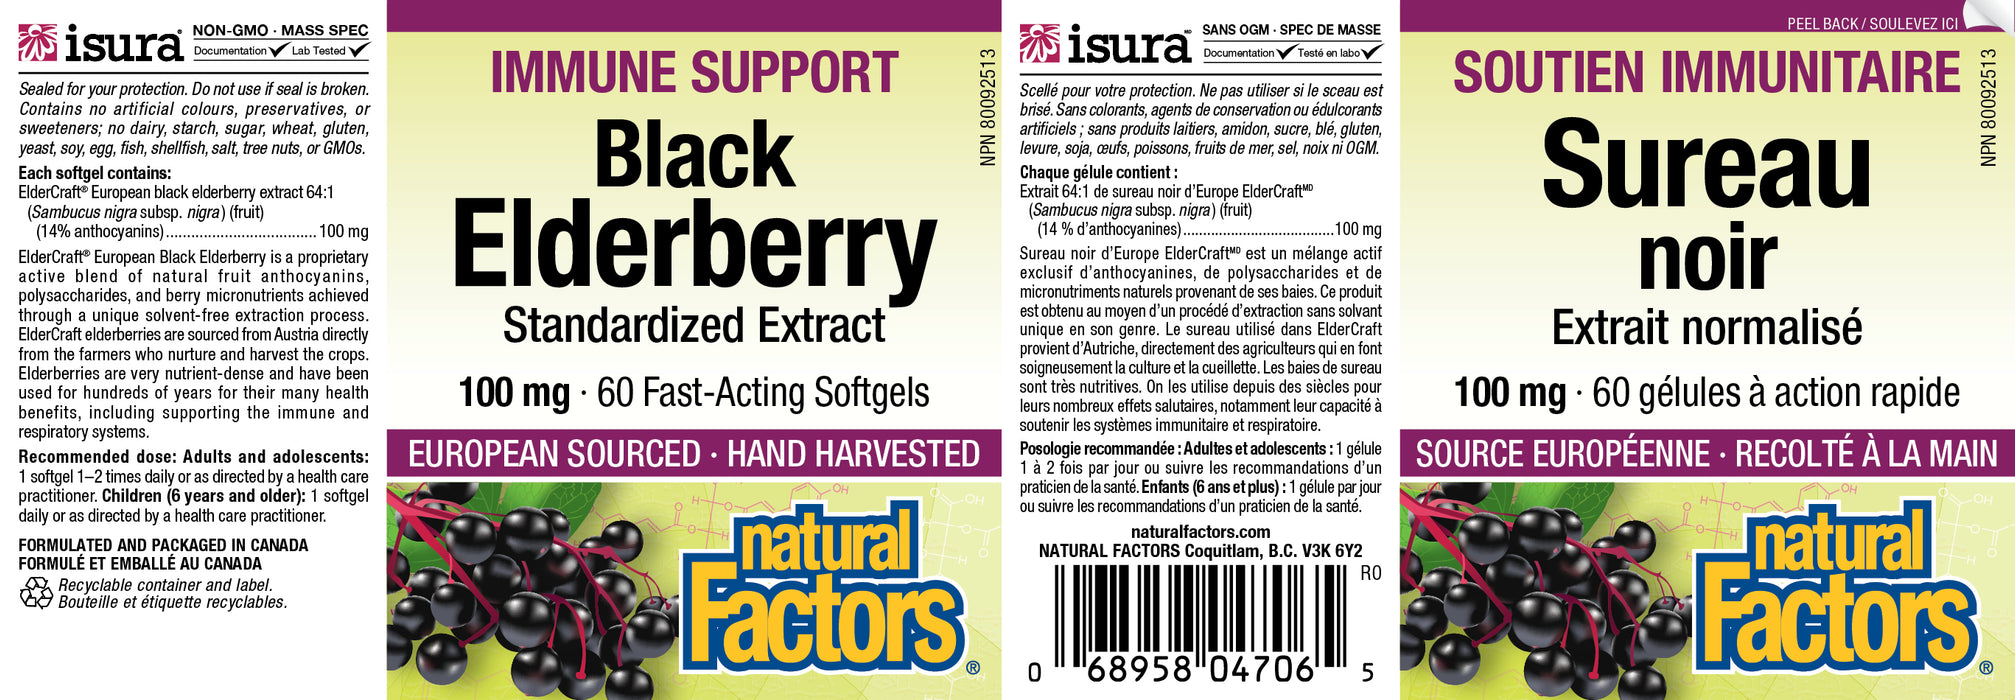 Natural Factors Black Elderberry - 100mg Standardized Extract 60 Fast-Acting Softgels